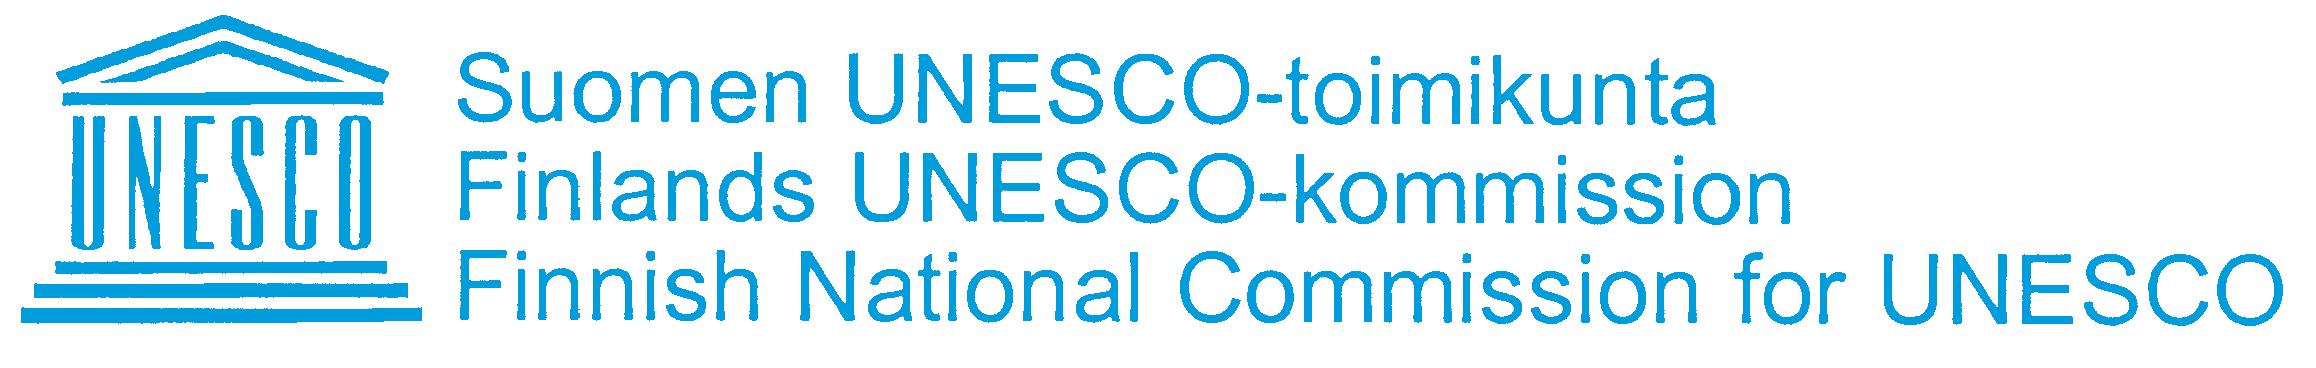 Unesco-toimikunnan logo